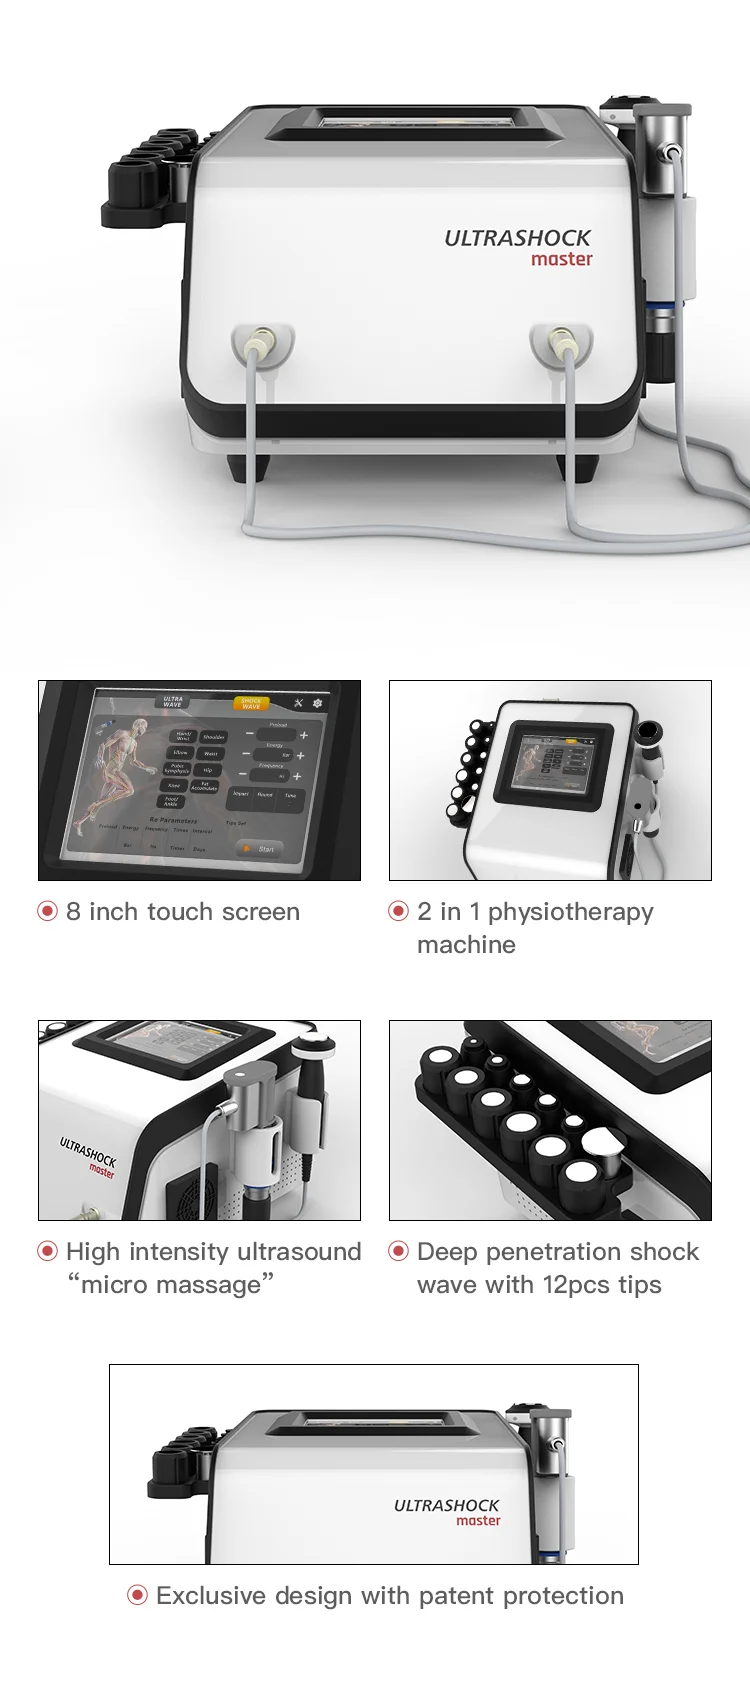 Buy Shockwave Ultrasound Therapy Machine price in Bangladesh